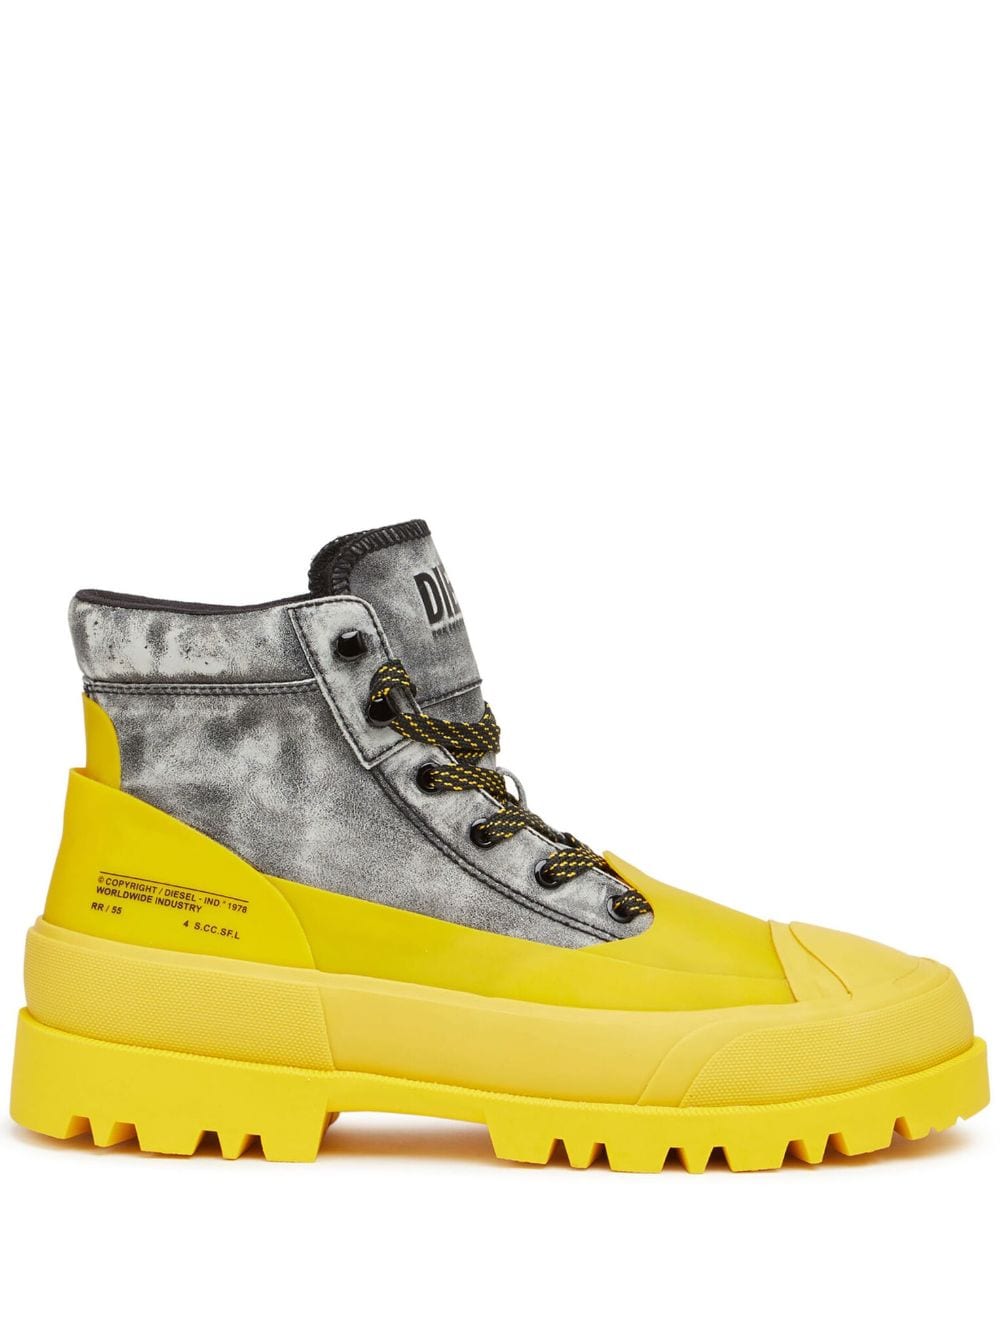 D-Hiko X lace-up boots